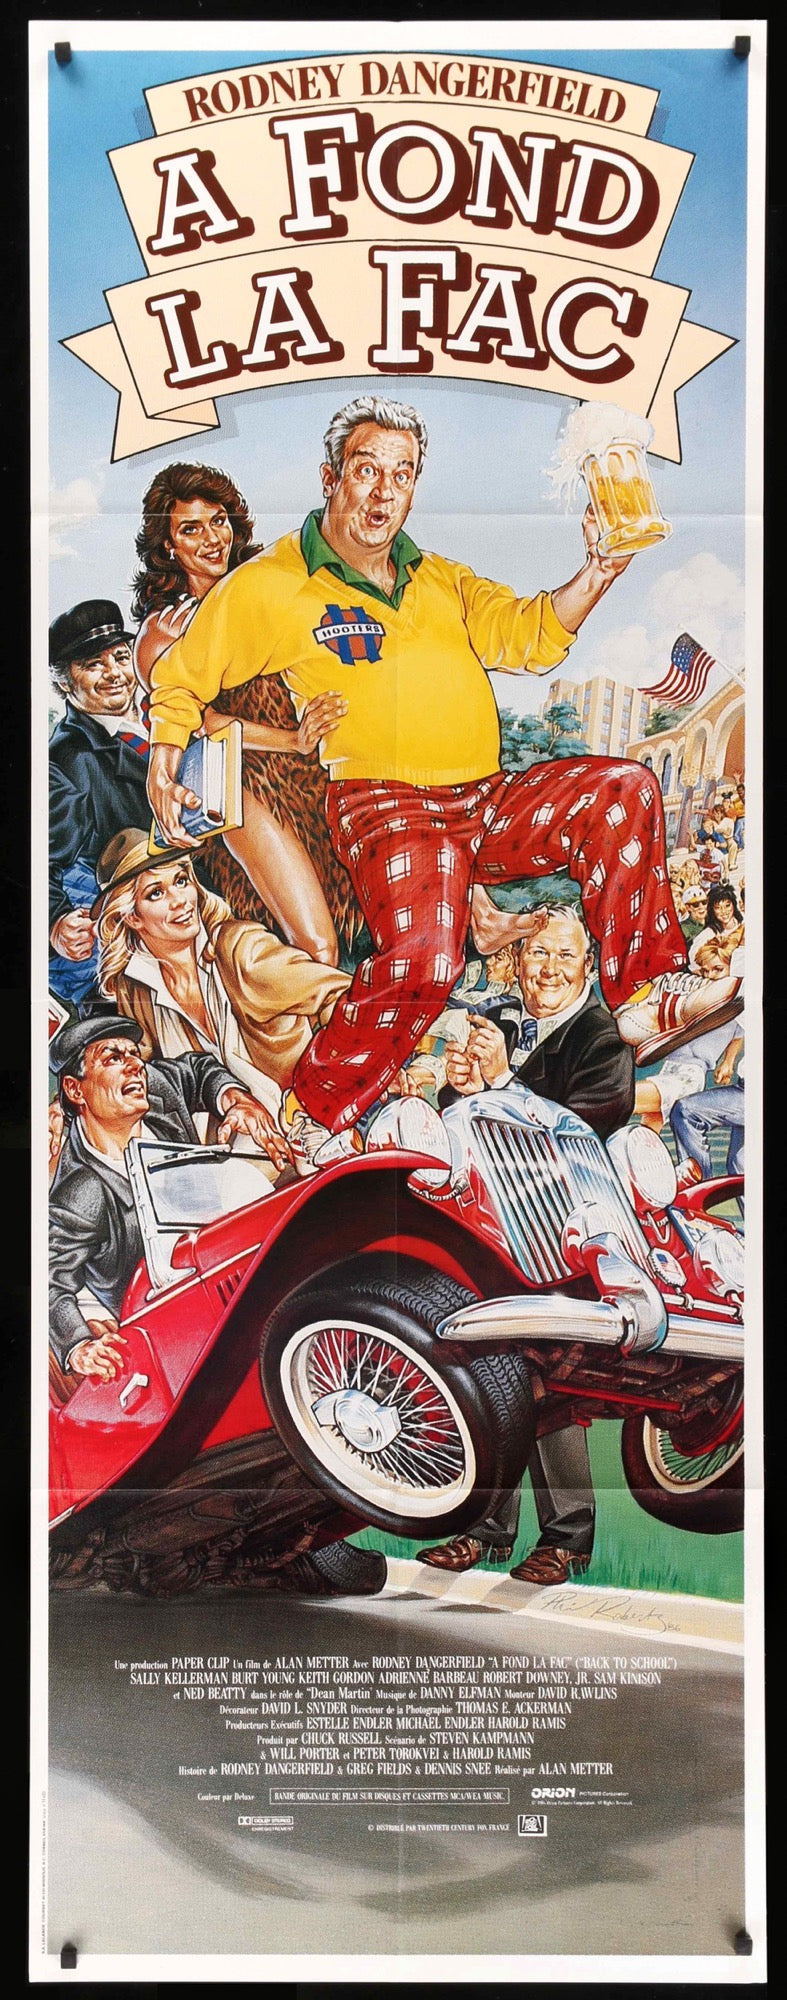 Back to School (1986) original movie poster for sale at Original Film Art